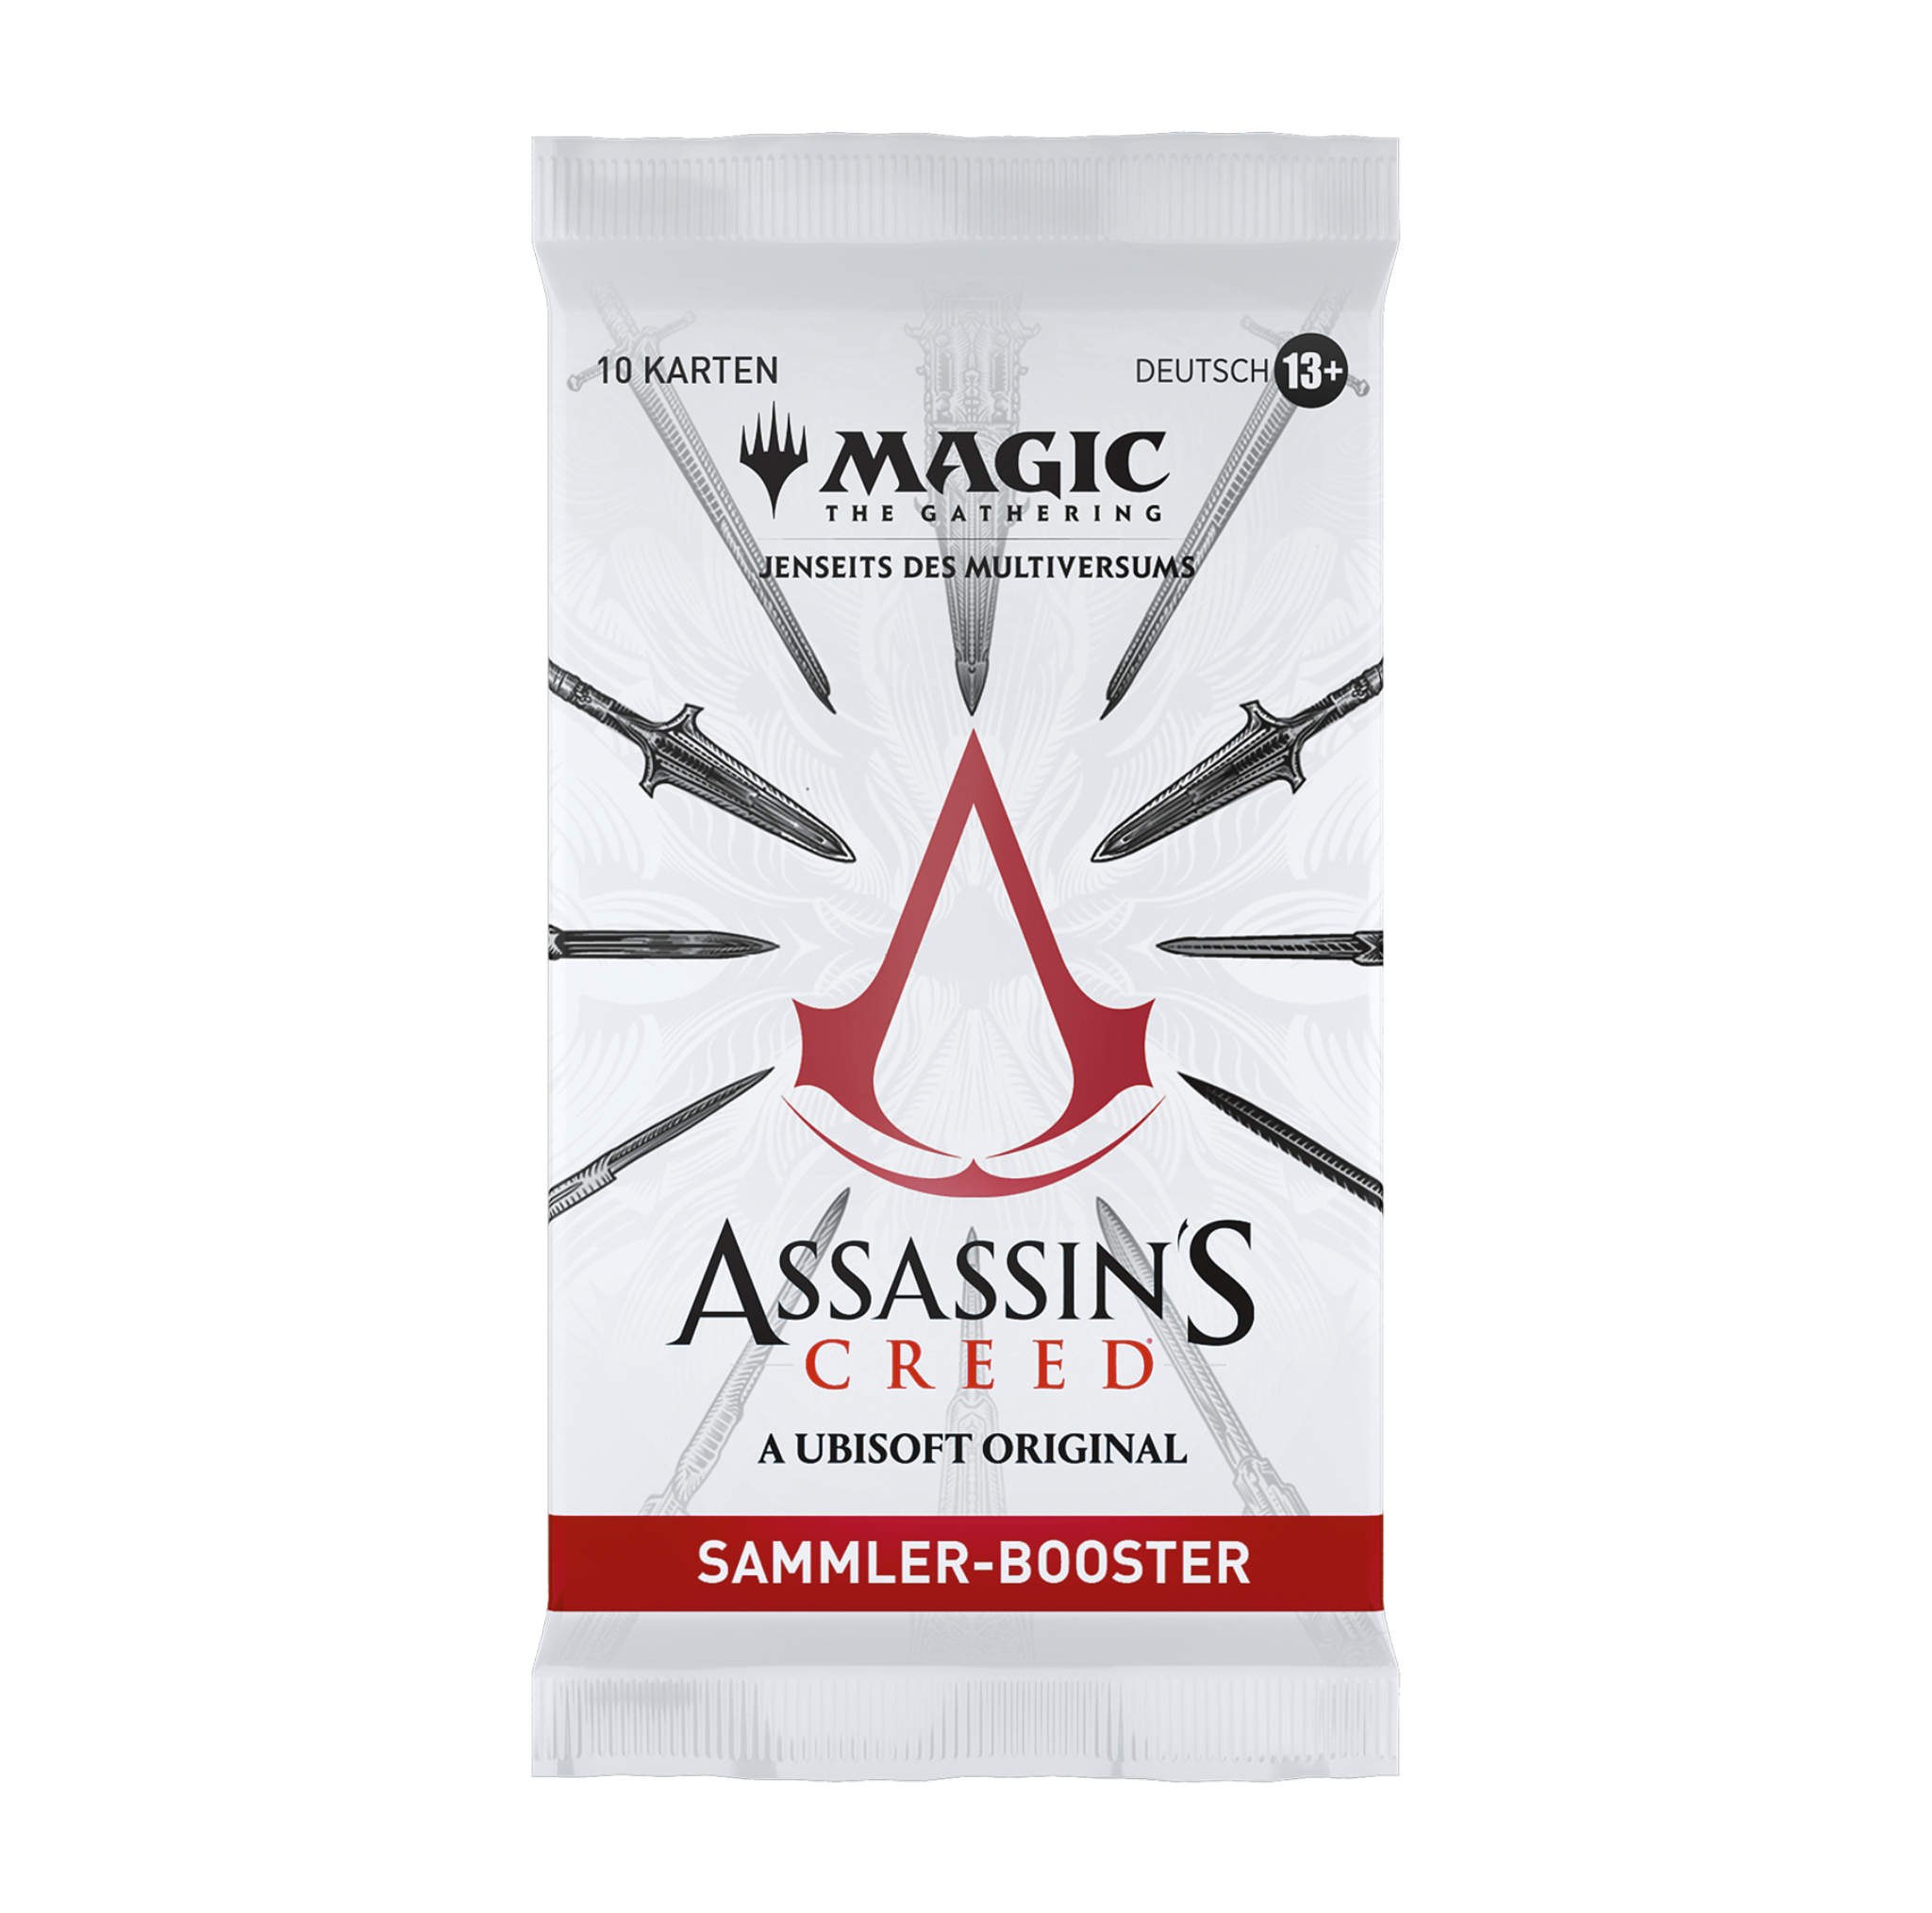 Magic: The Gathering - Jenseits des Multiversums: Assassin's Creed Sammler Booster Display - DE